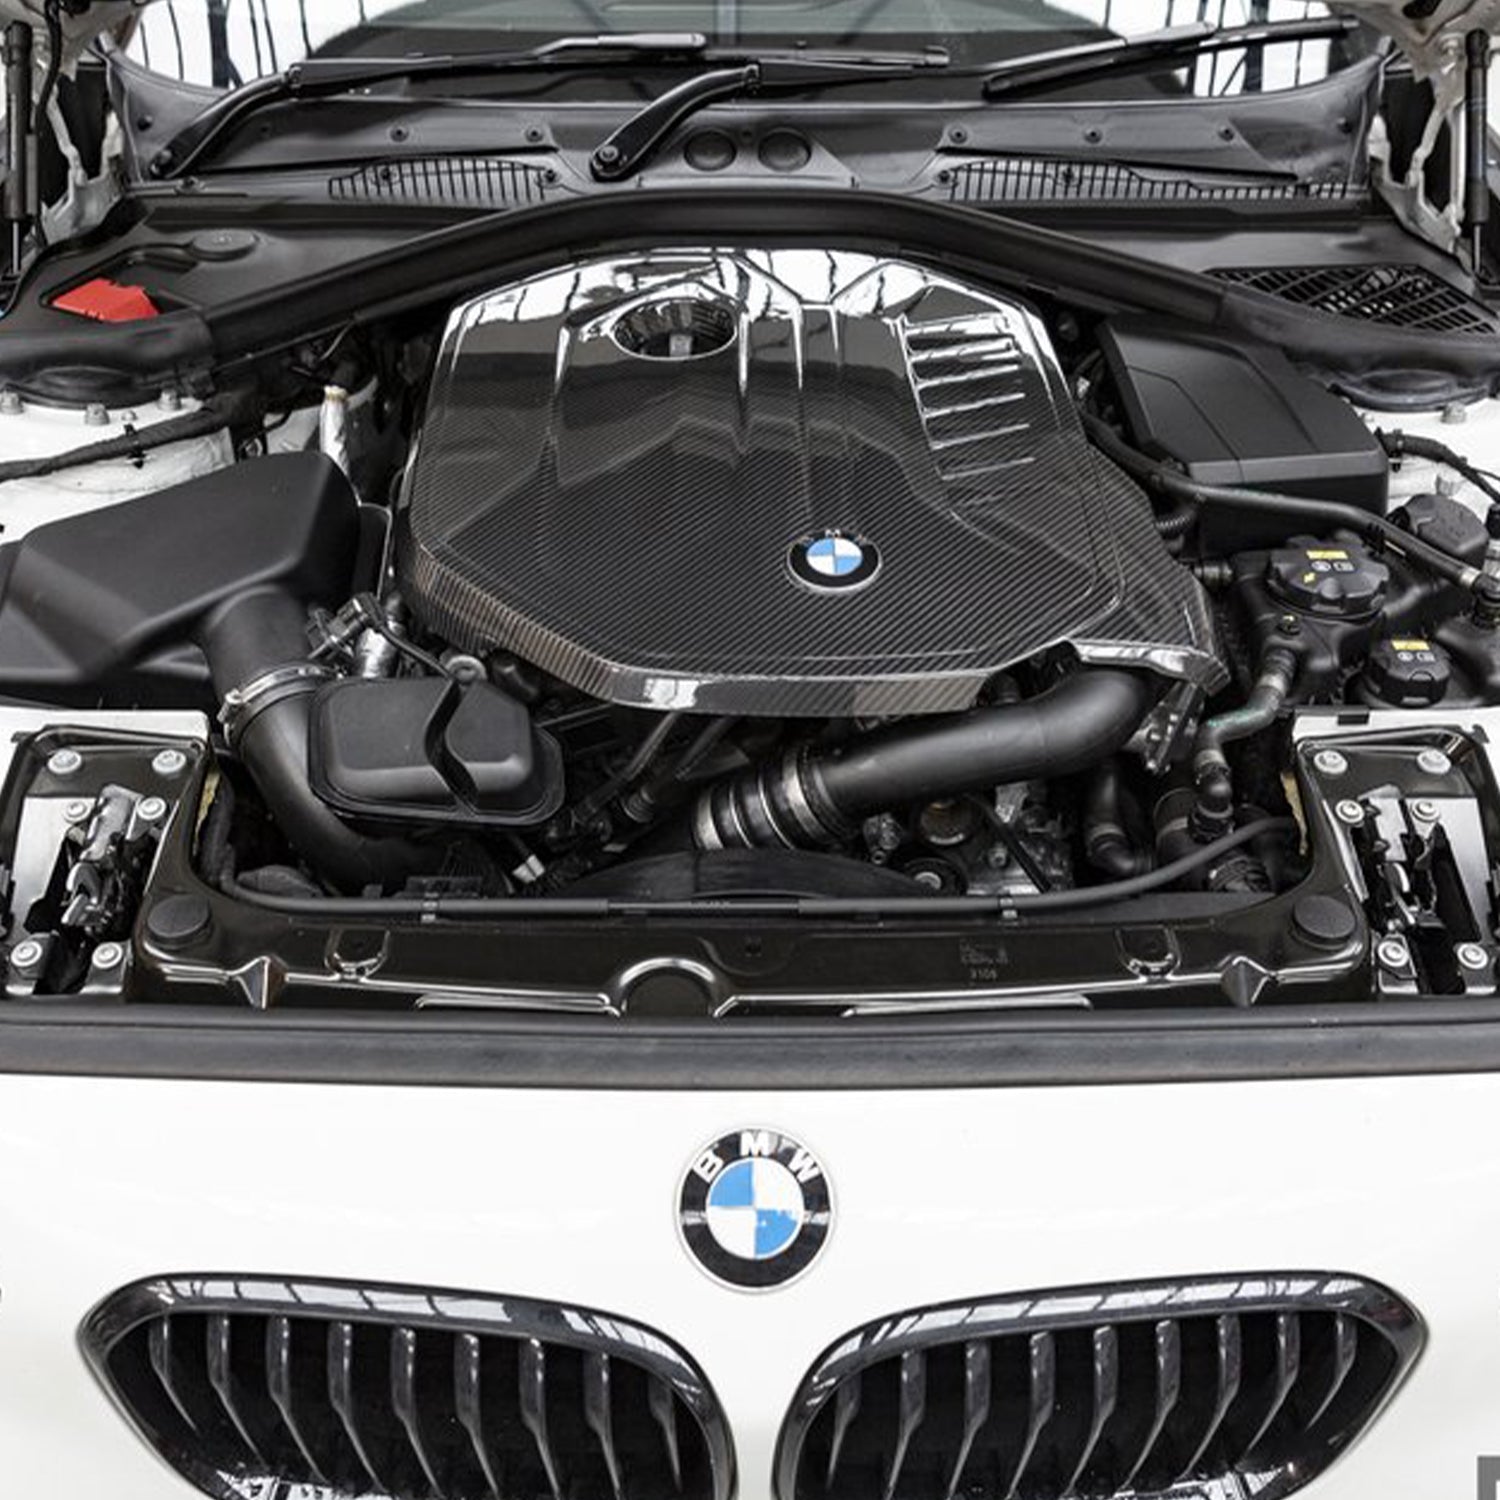 Eventuri Carbon Motorabdeckung BMW N55 Motor F20 F30